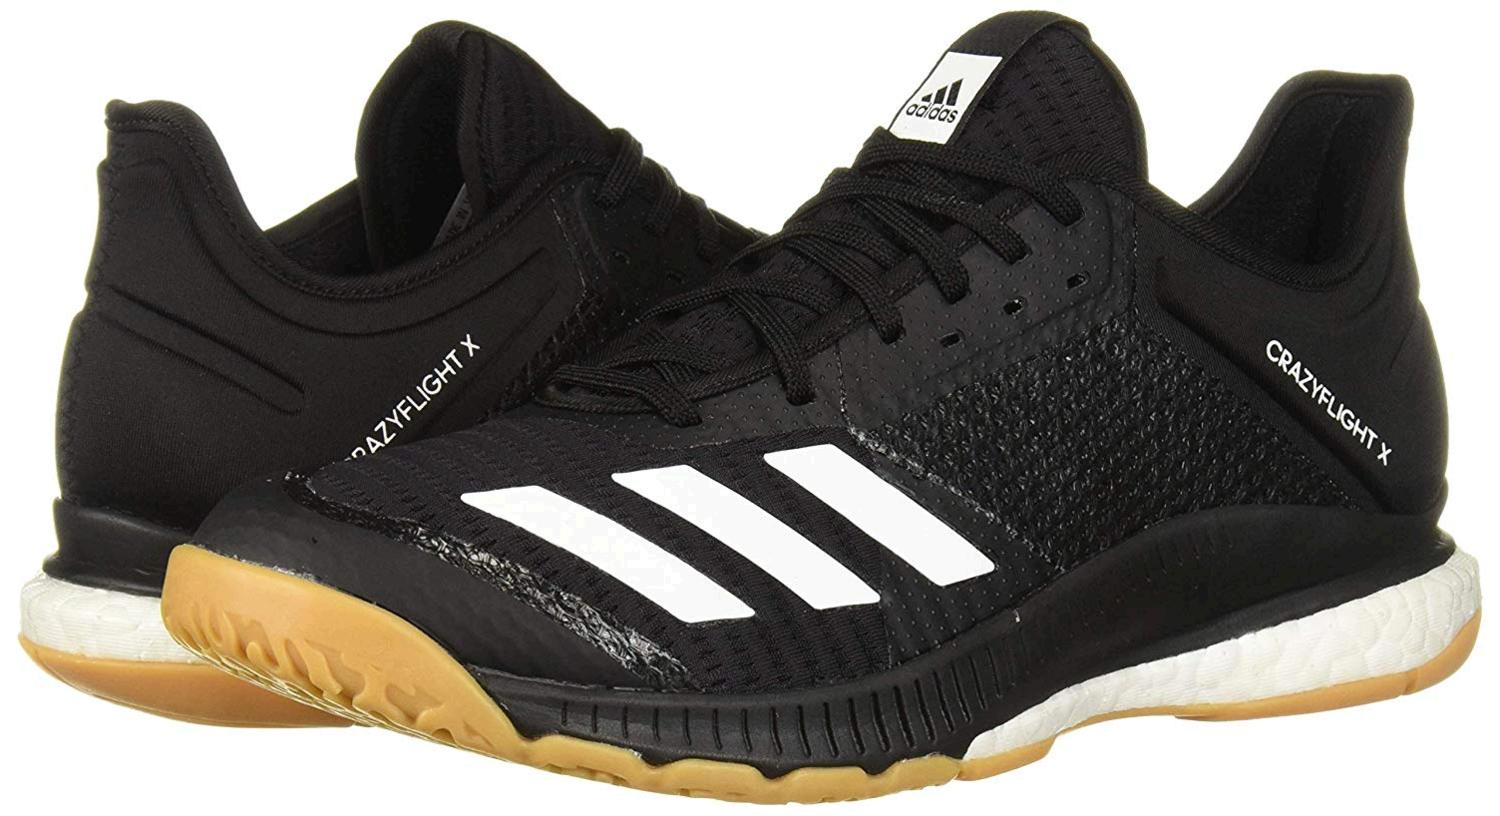 adidas Women's Crazyflight X 3 Volleyball Shoe, Black/White/Gum, Size ...